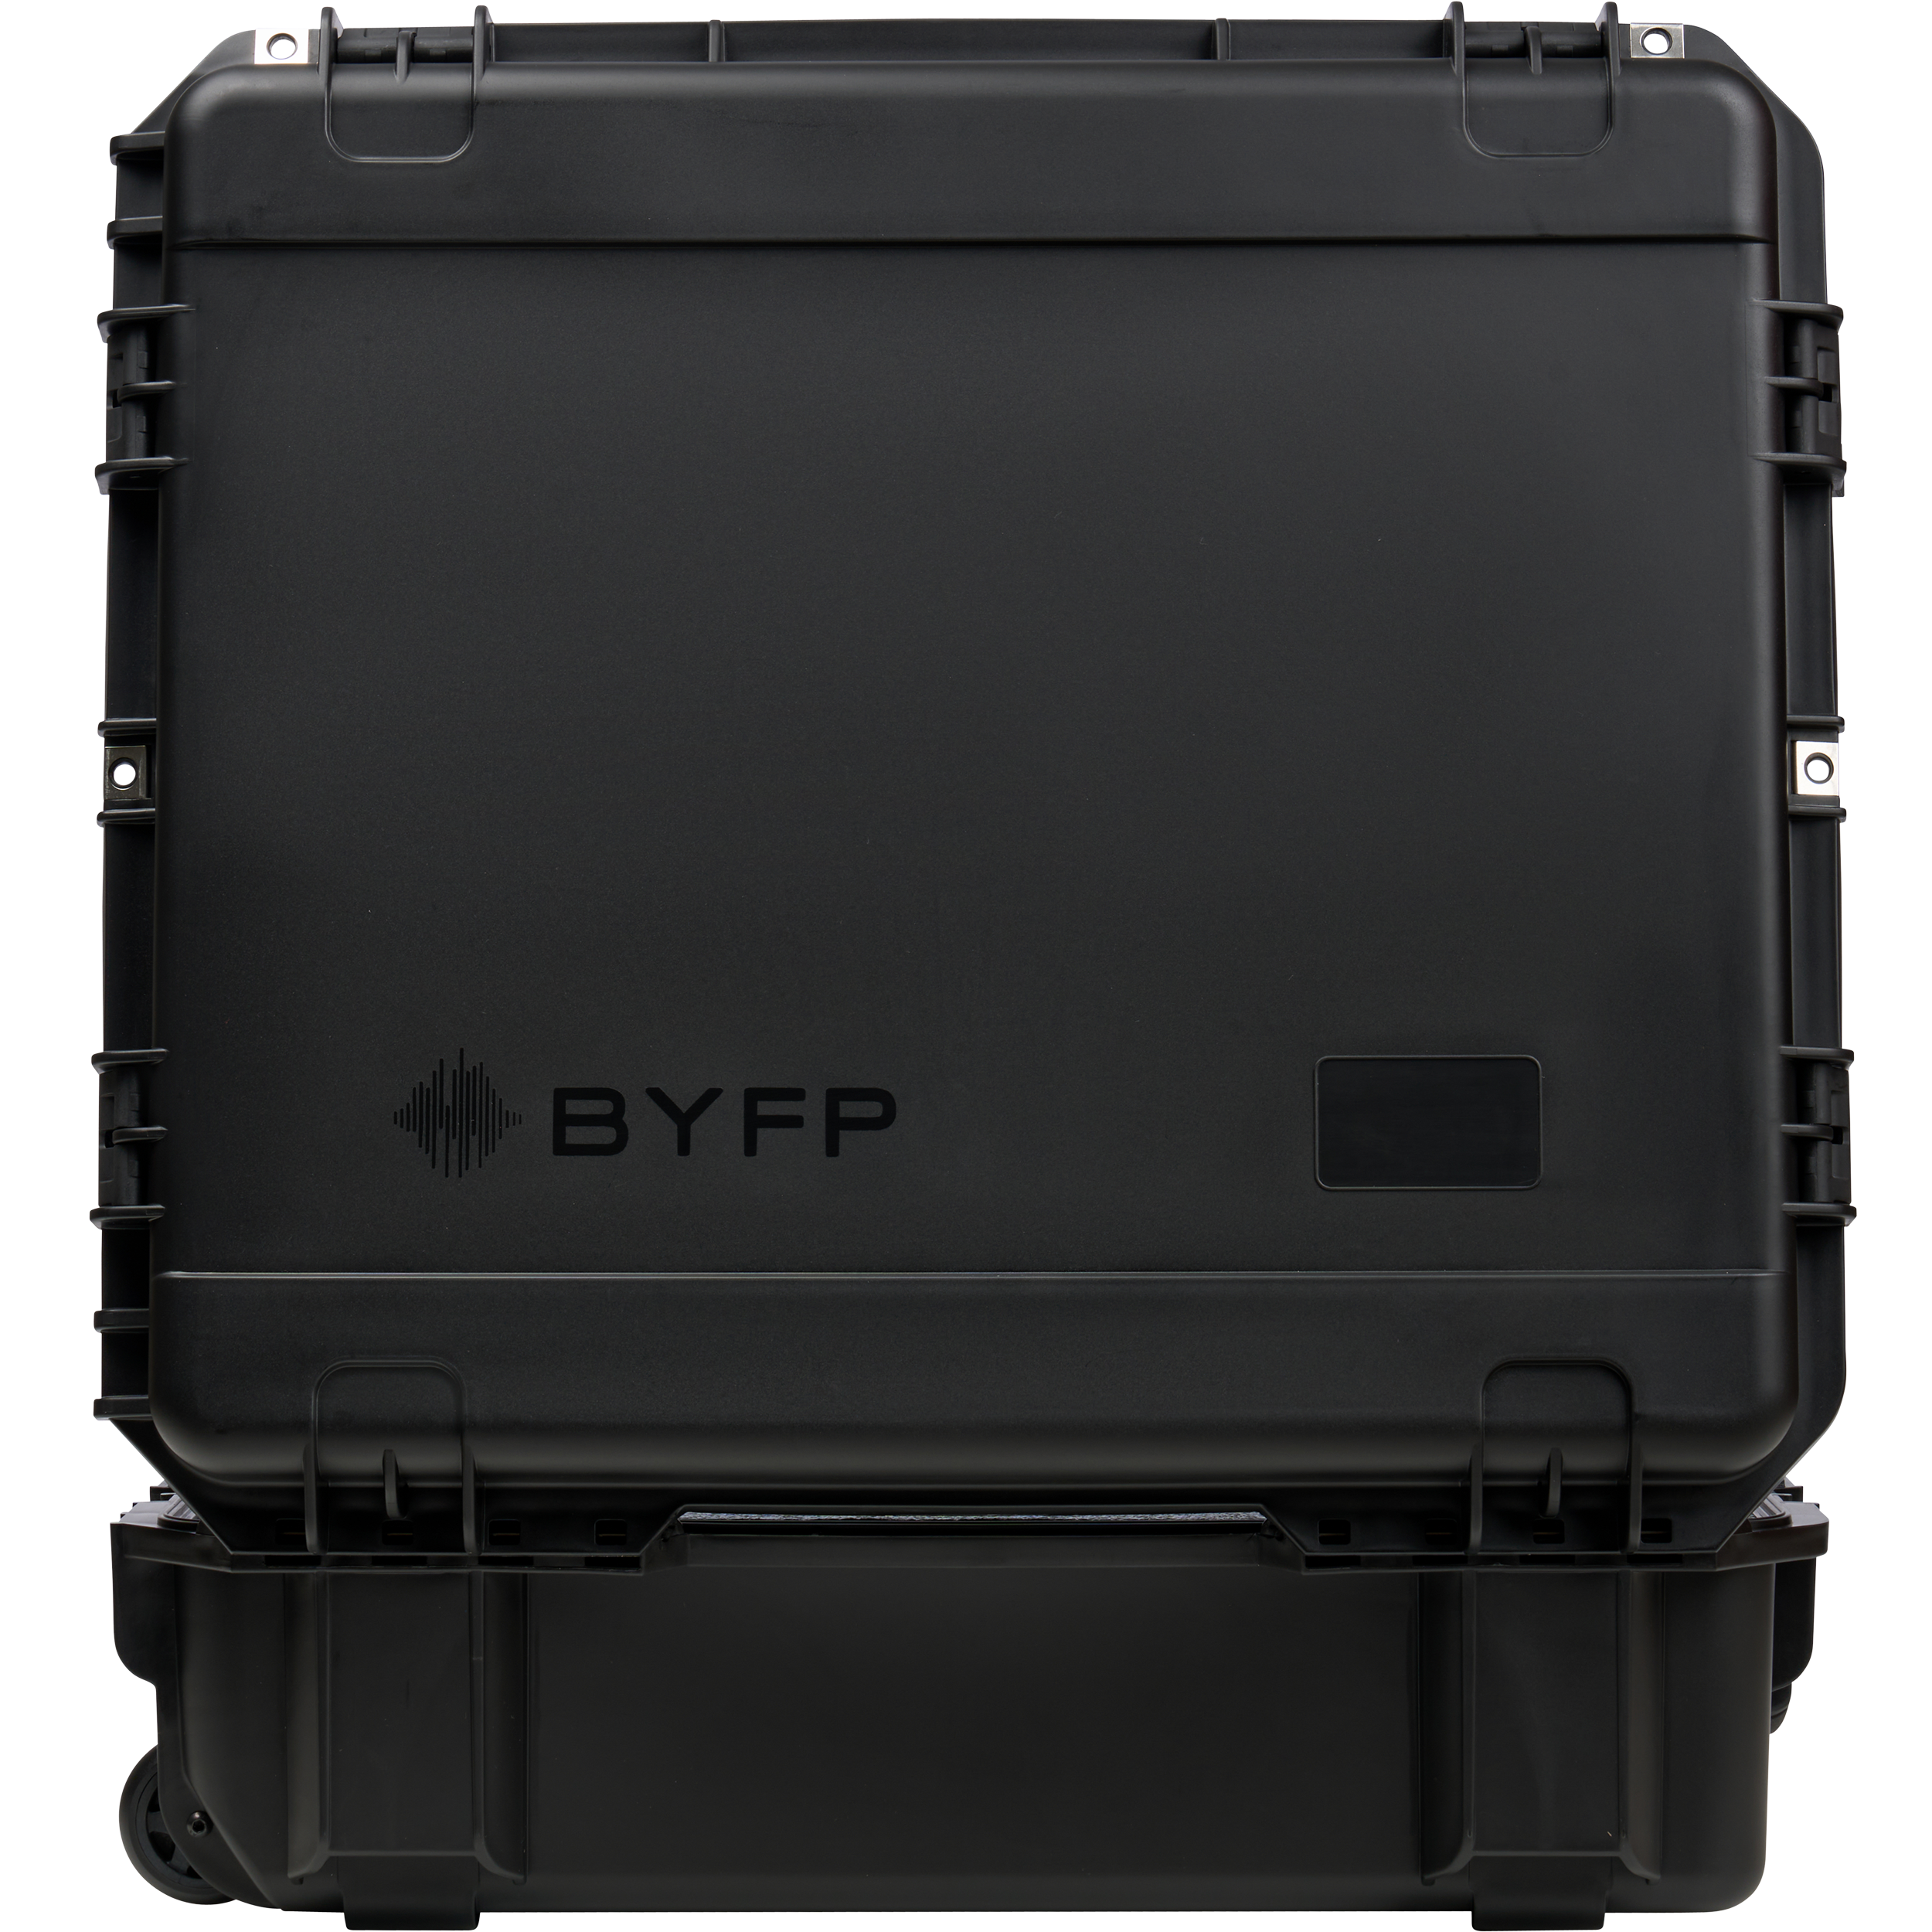 BYFP ipCase for ChamSys MagicQ MQ50 & MQ70 Lighting Controllers